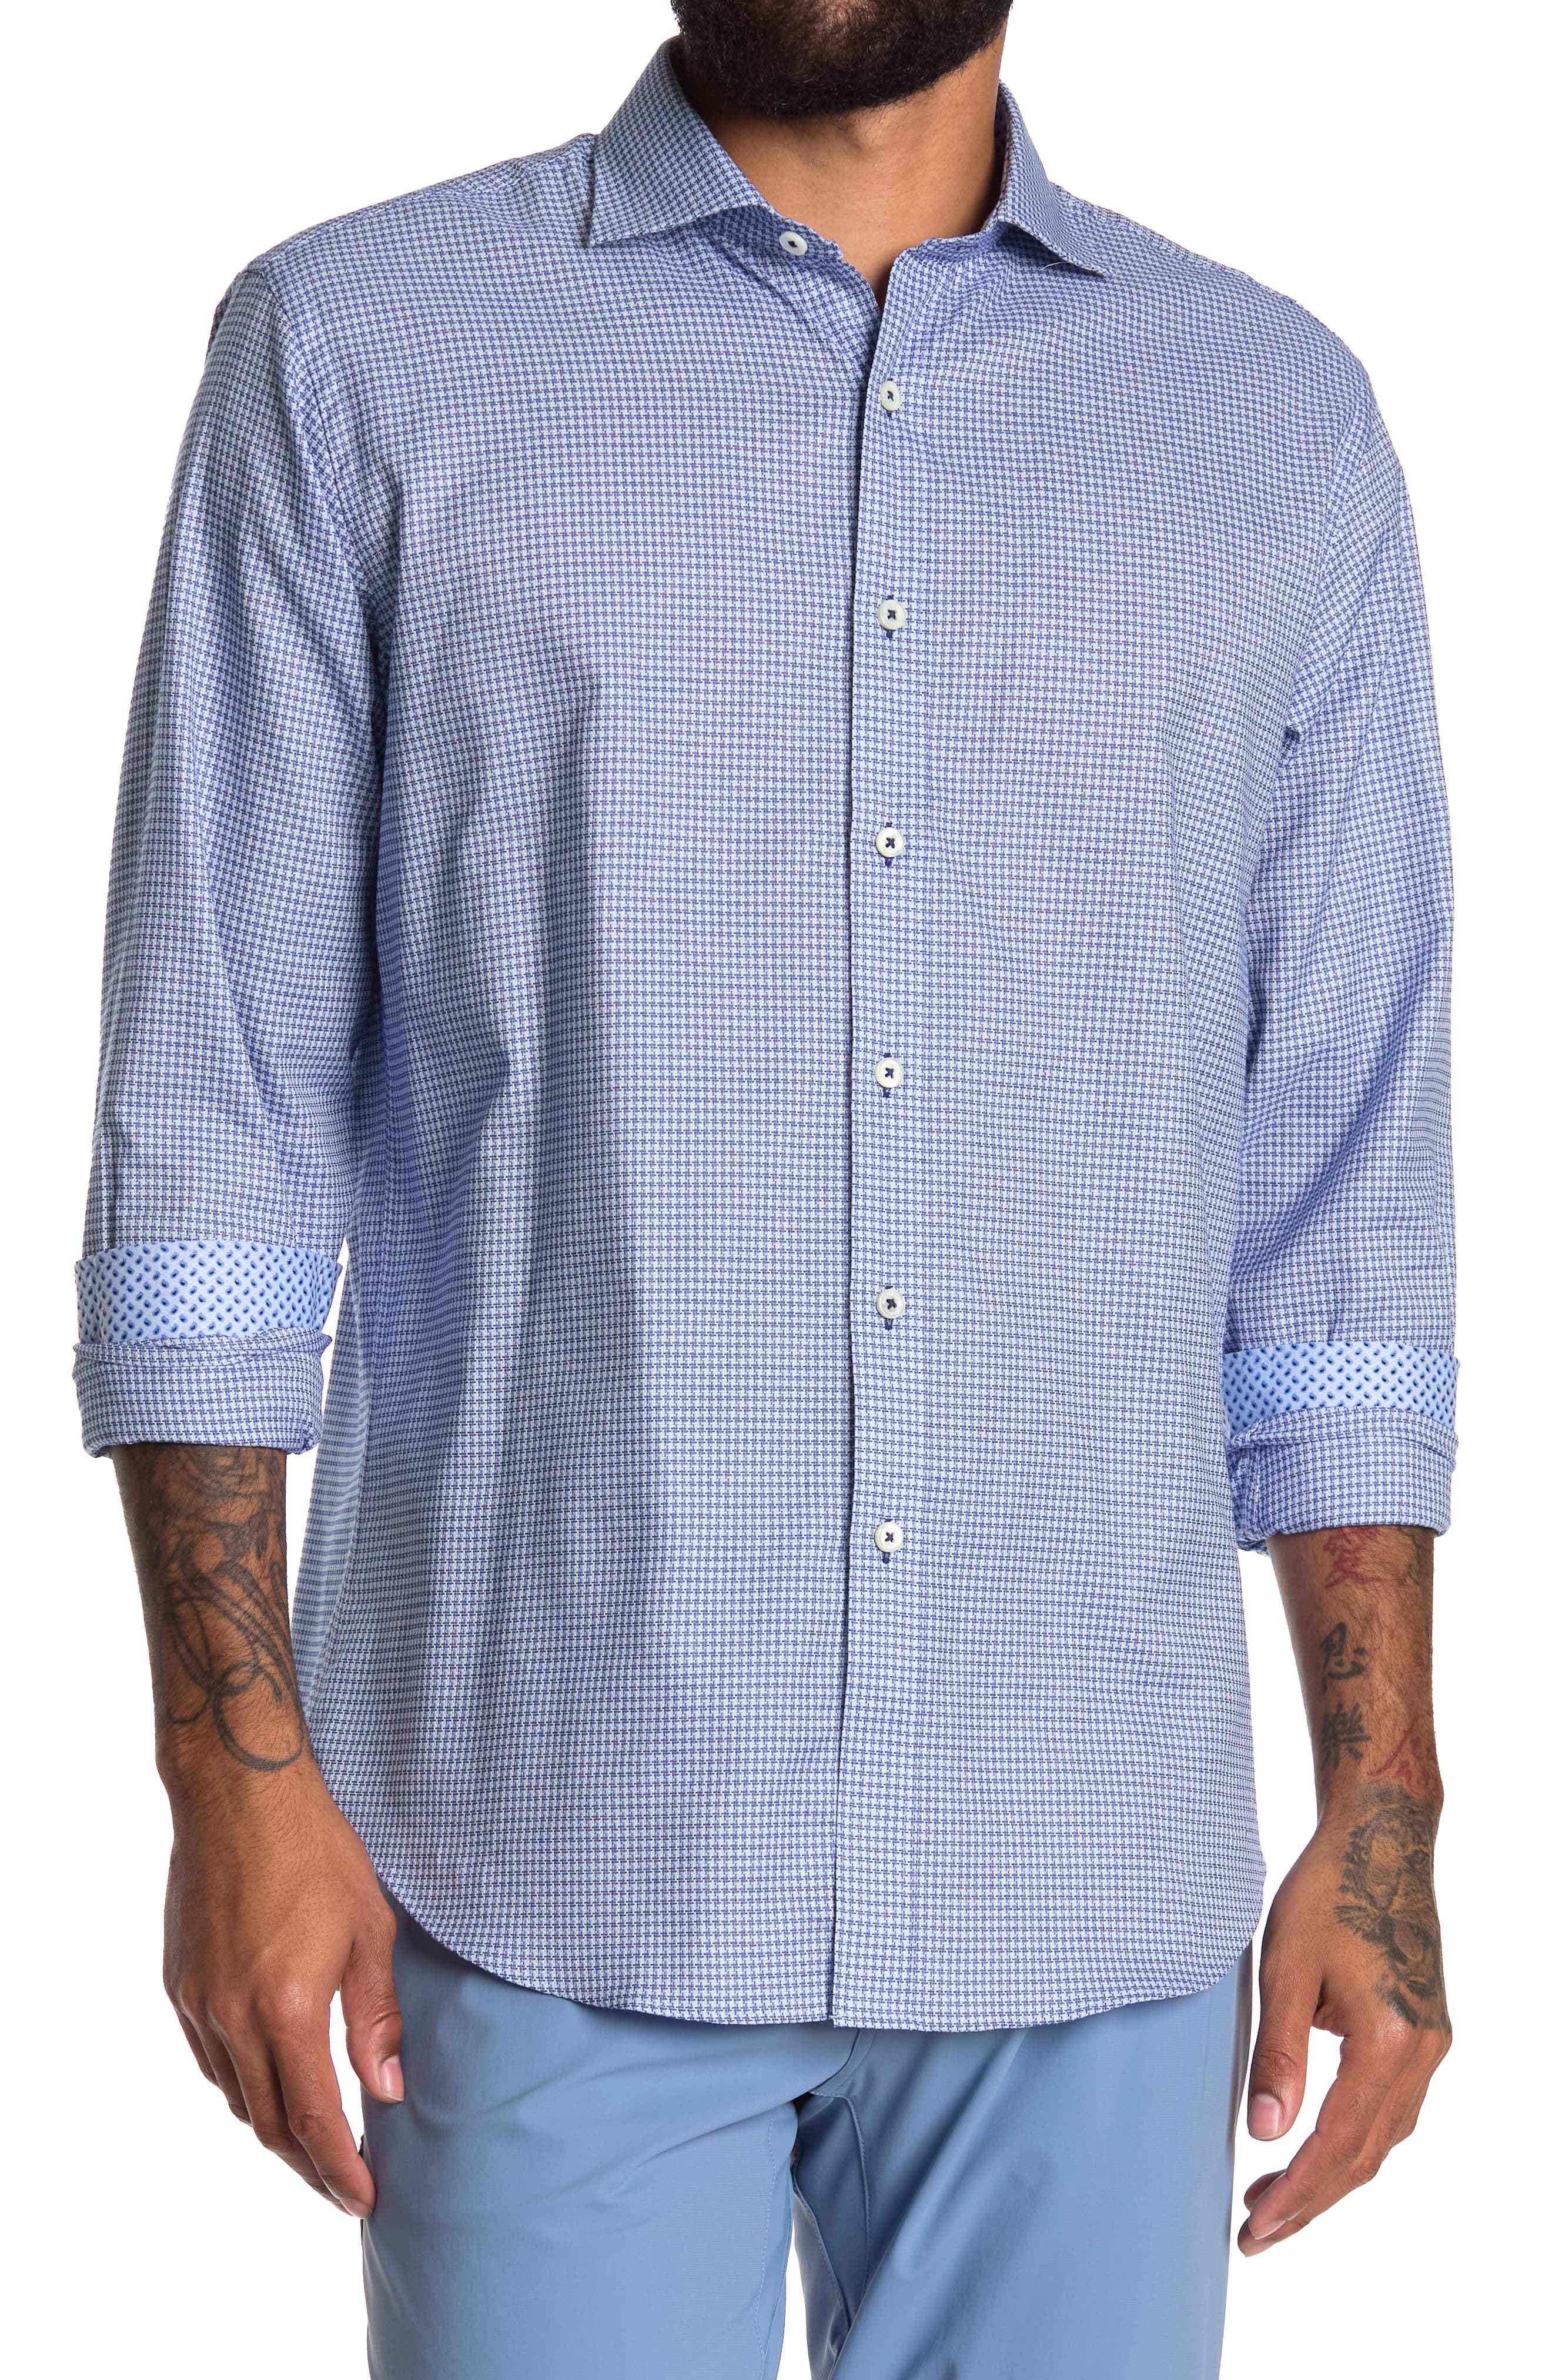 DFHYAR Mens Dress Shirt Regular Fit Casual Business Button Down Long Sleeve Cotton Polyester 